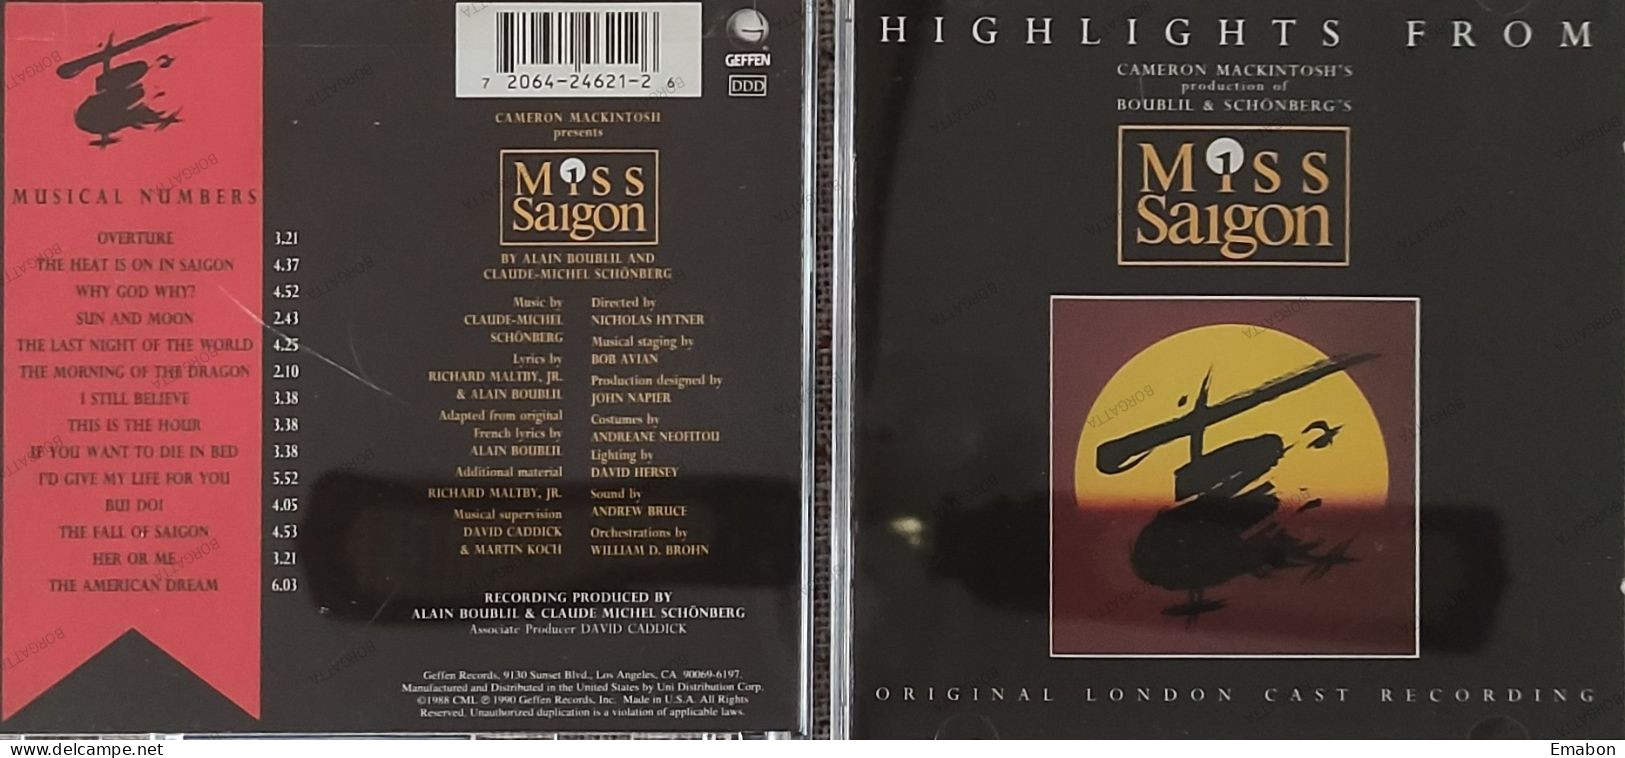 BORGATTA - FILM MUSIC - Cd ALAIN BOUBLIL - HIGHLIGHTS FROM MISS SAIGON   - GEFFEN RECORDS 1990 - USATO In Buono Stato - Soundtracks, Film Music